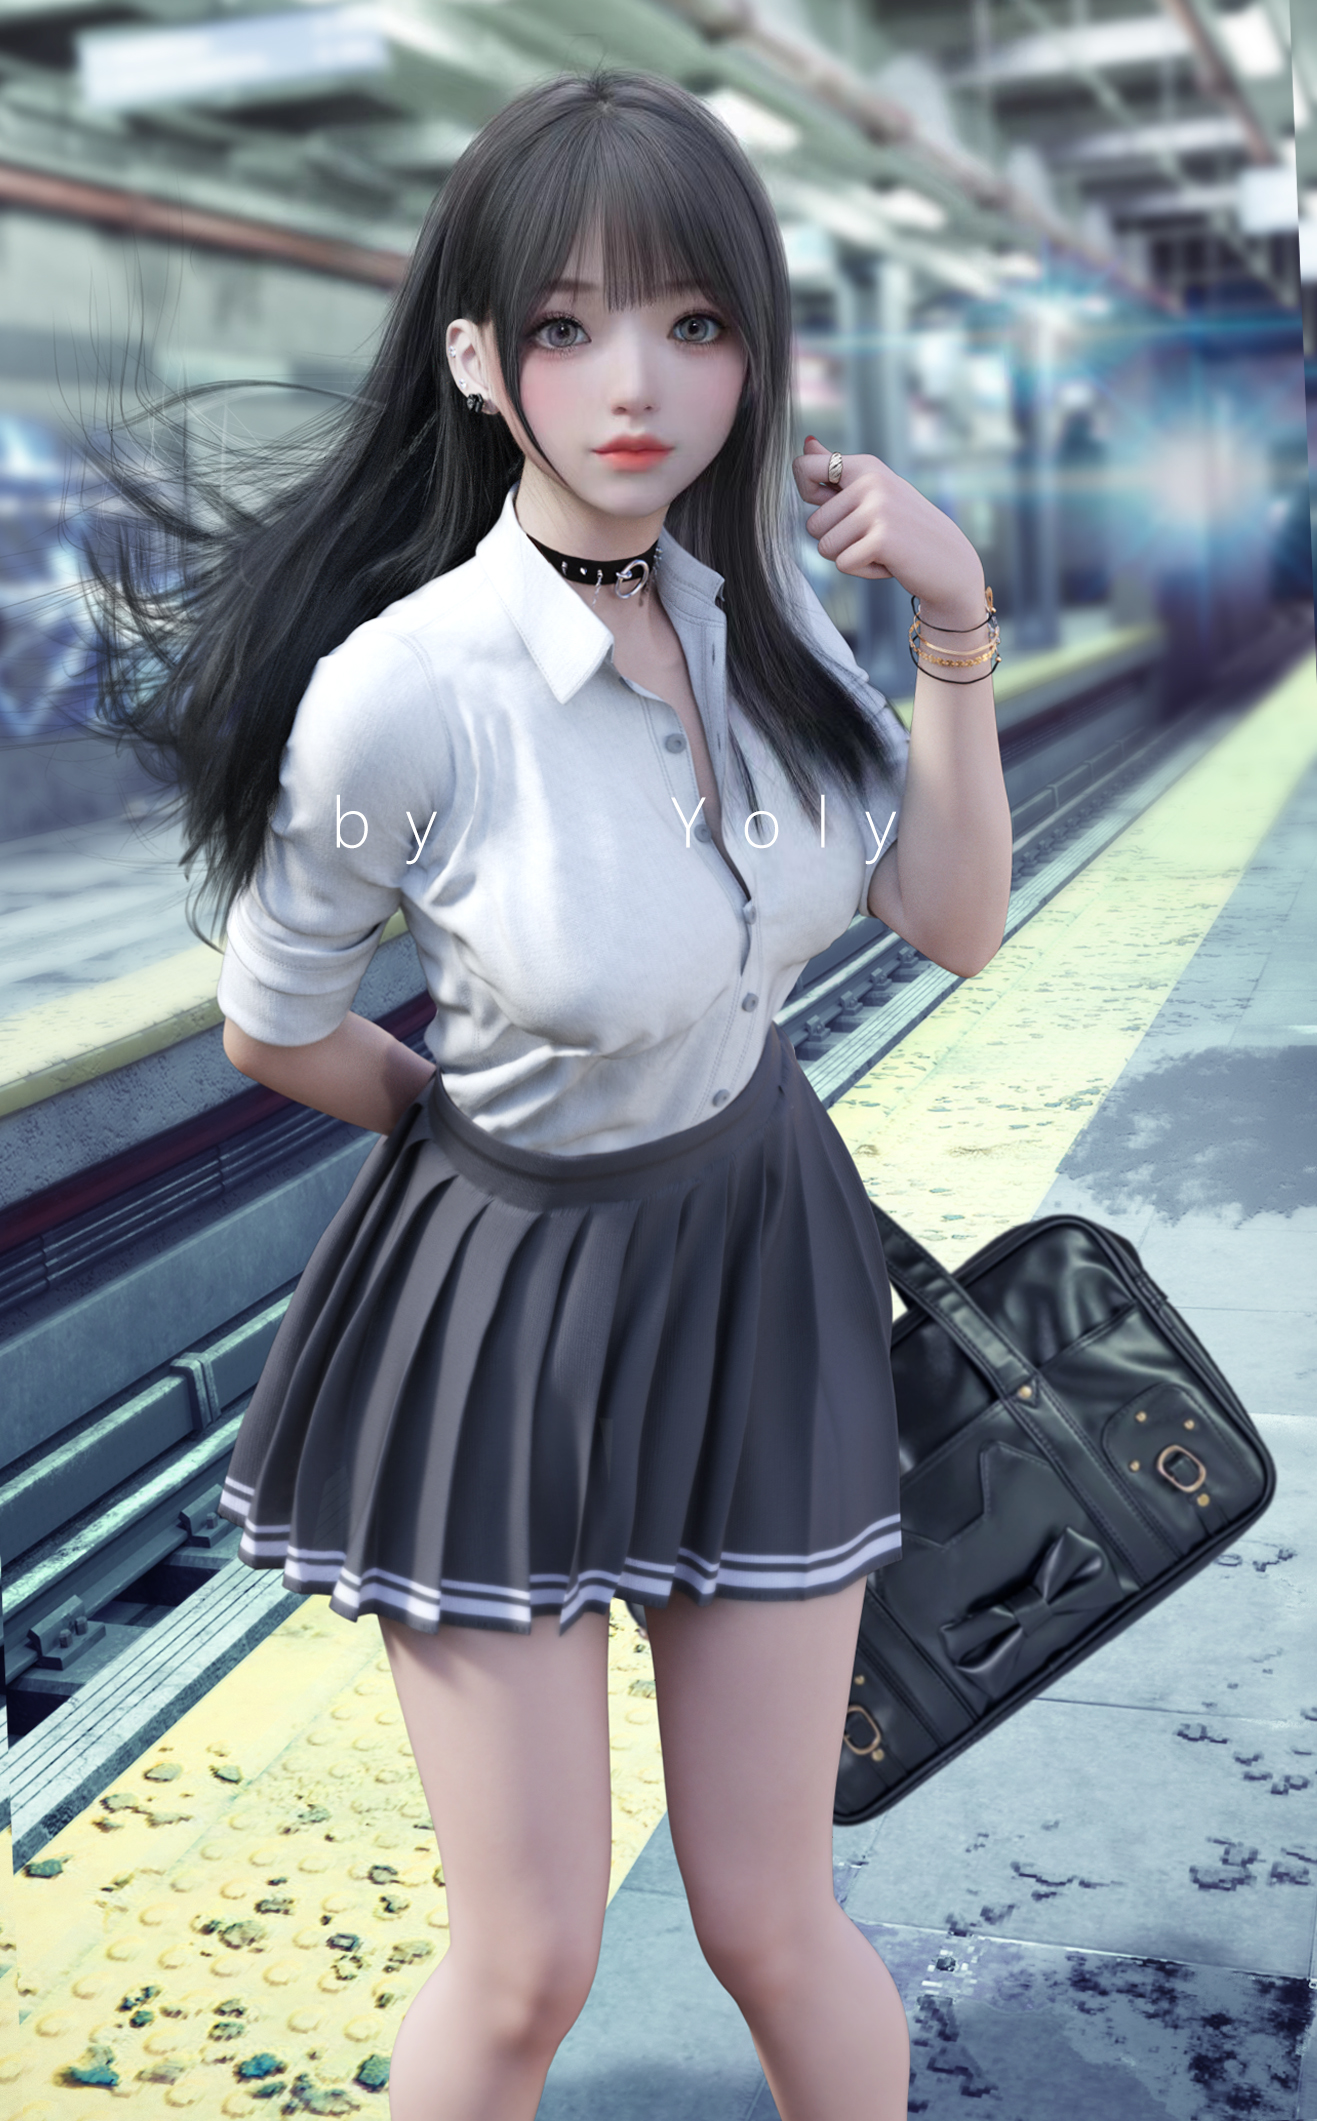 3D CG Fantasy Girl School Uniform Schoolgirl Bag Yoly 1317x2121